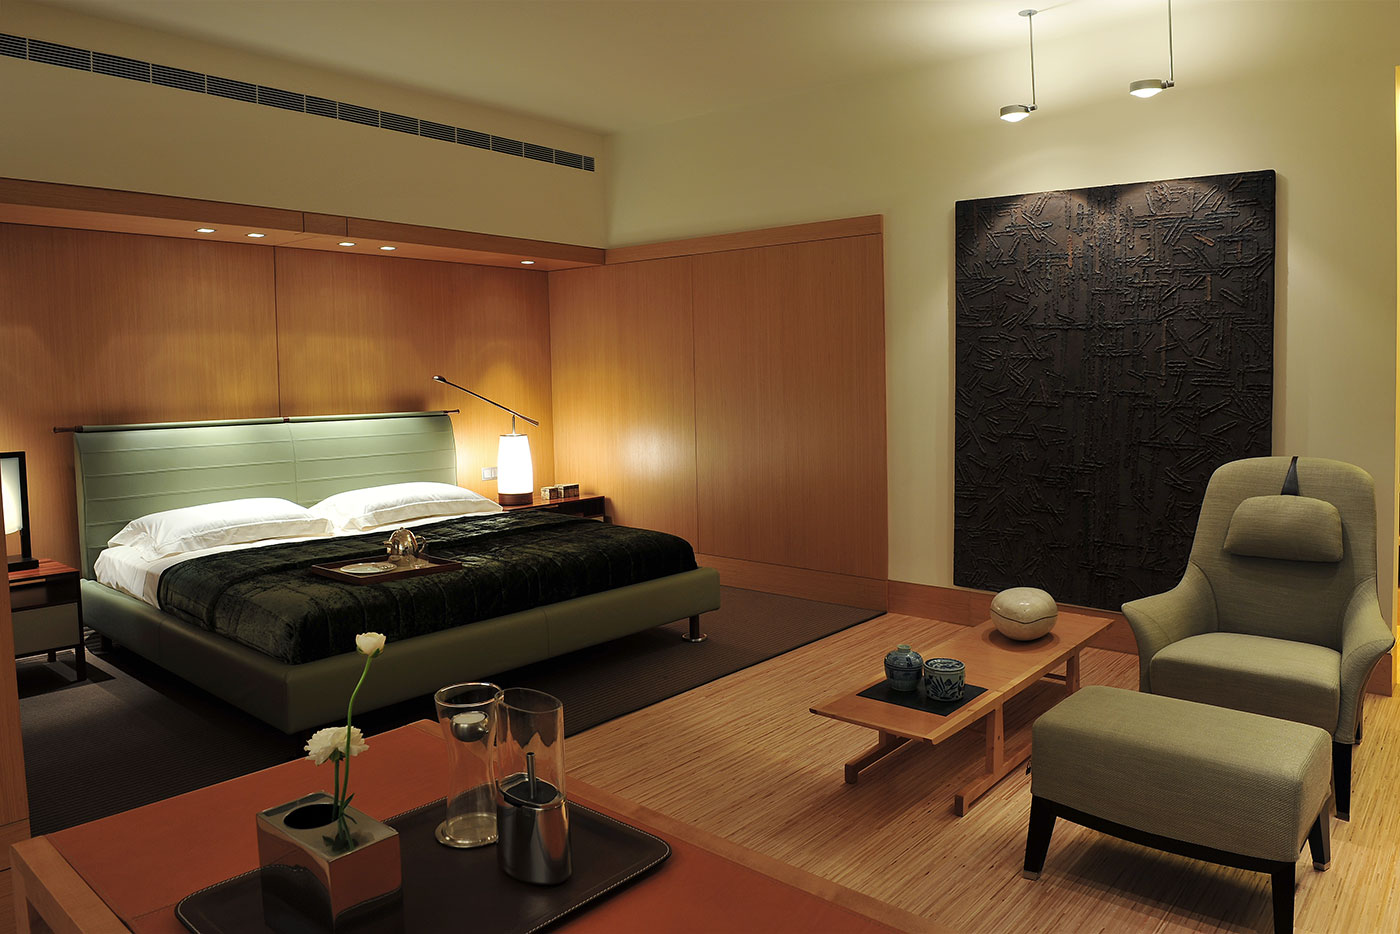 Obegi Home: Discover The Bold Luxurious Interior Designs!